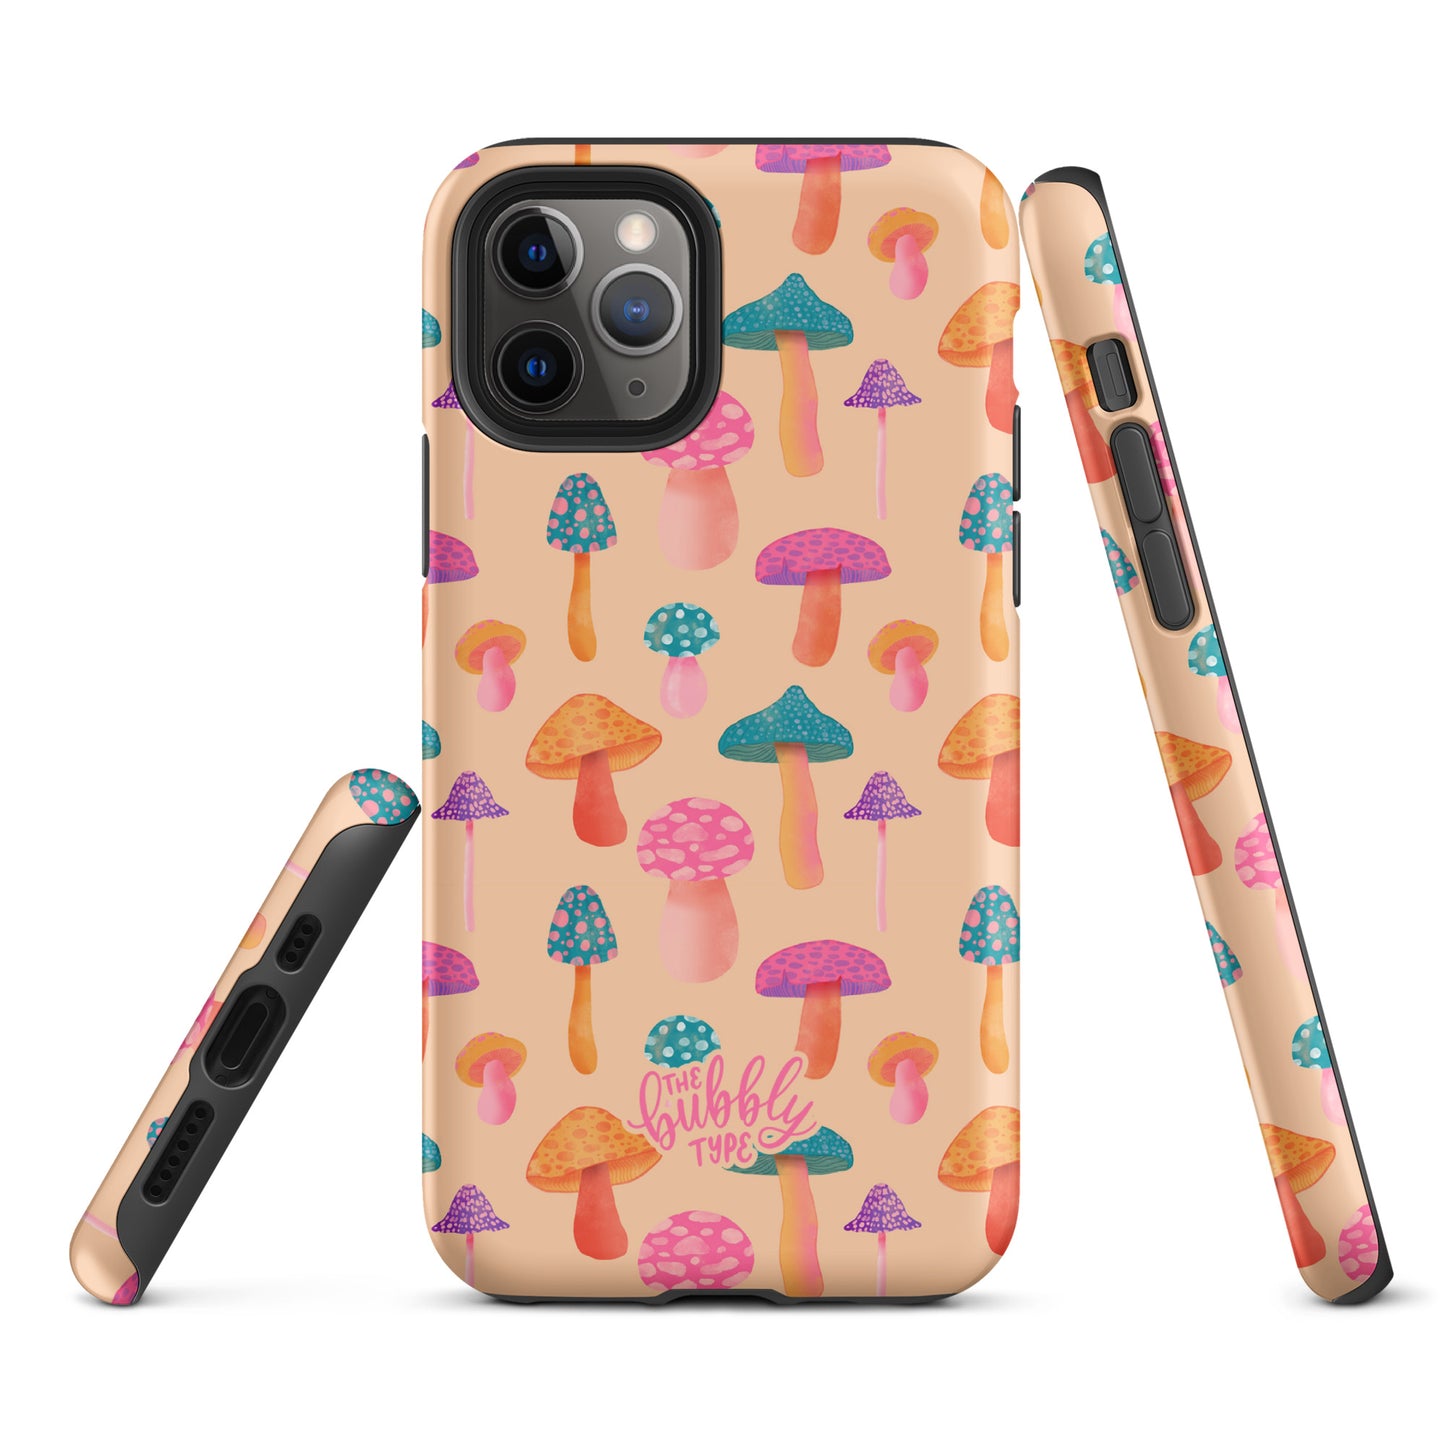 Colourful Mushrooms Tough iPhone case